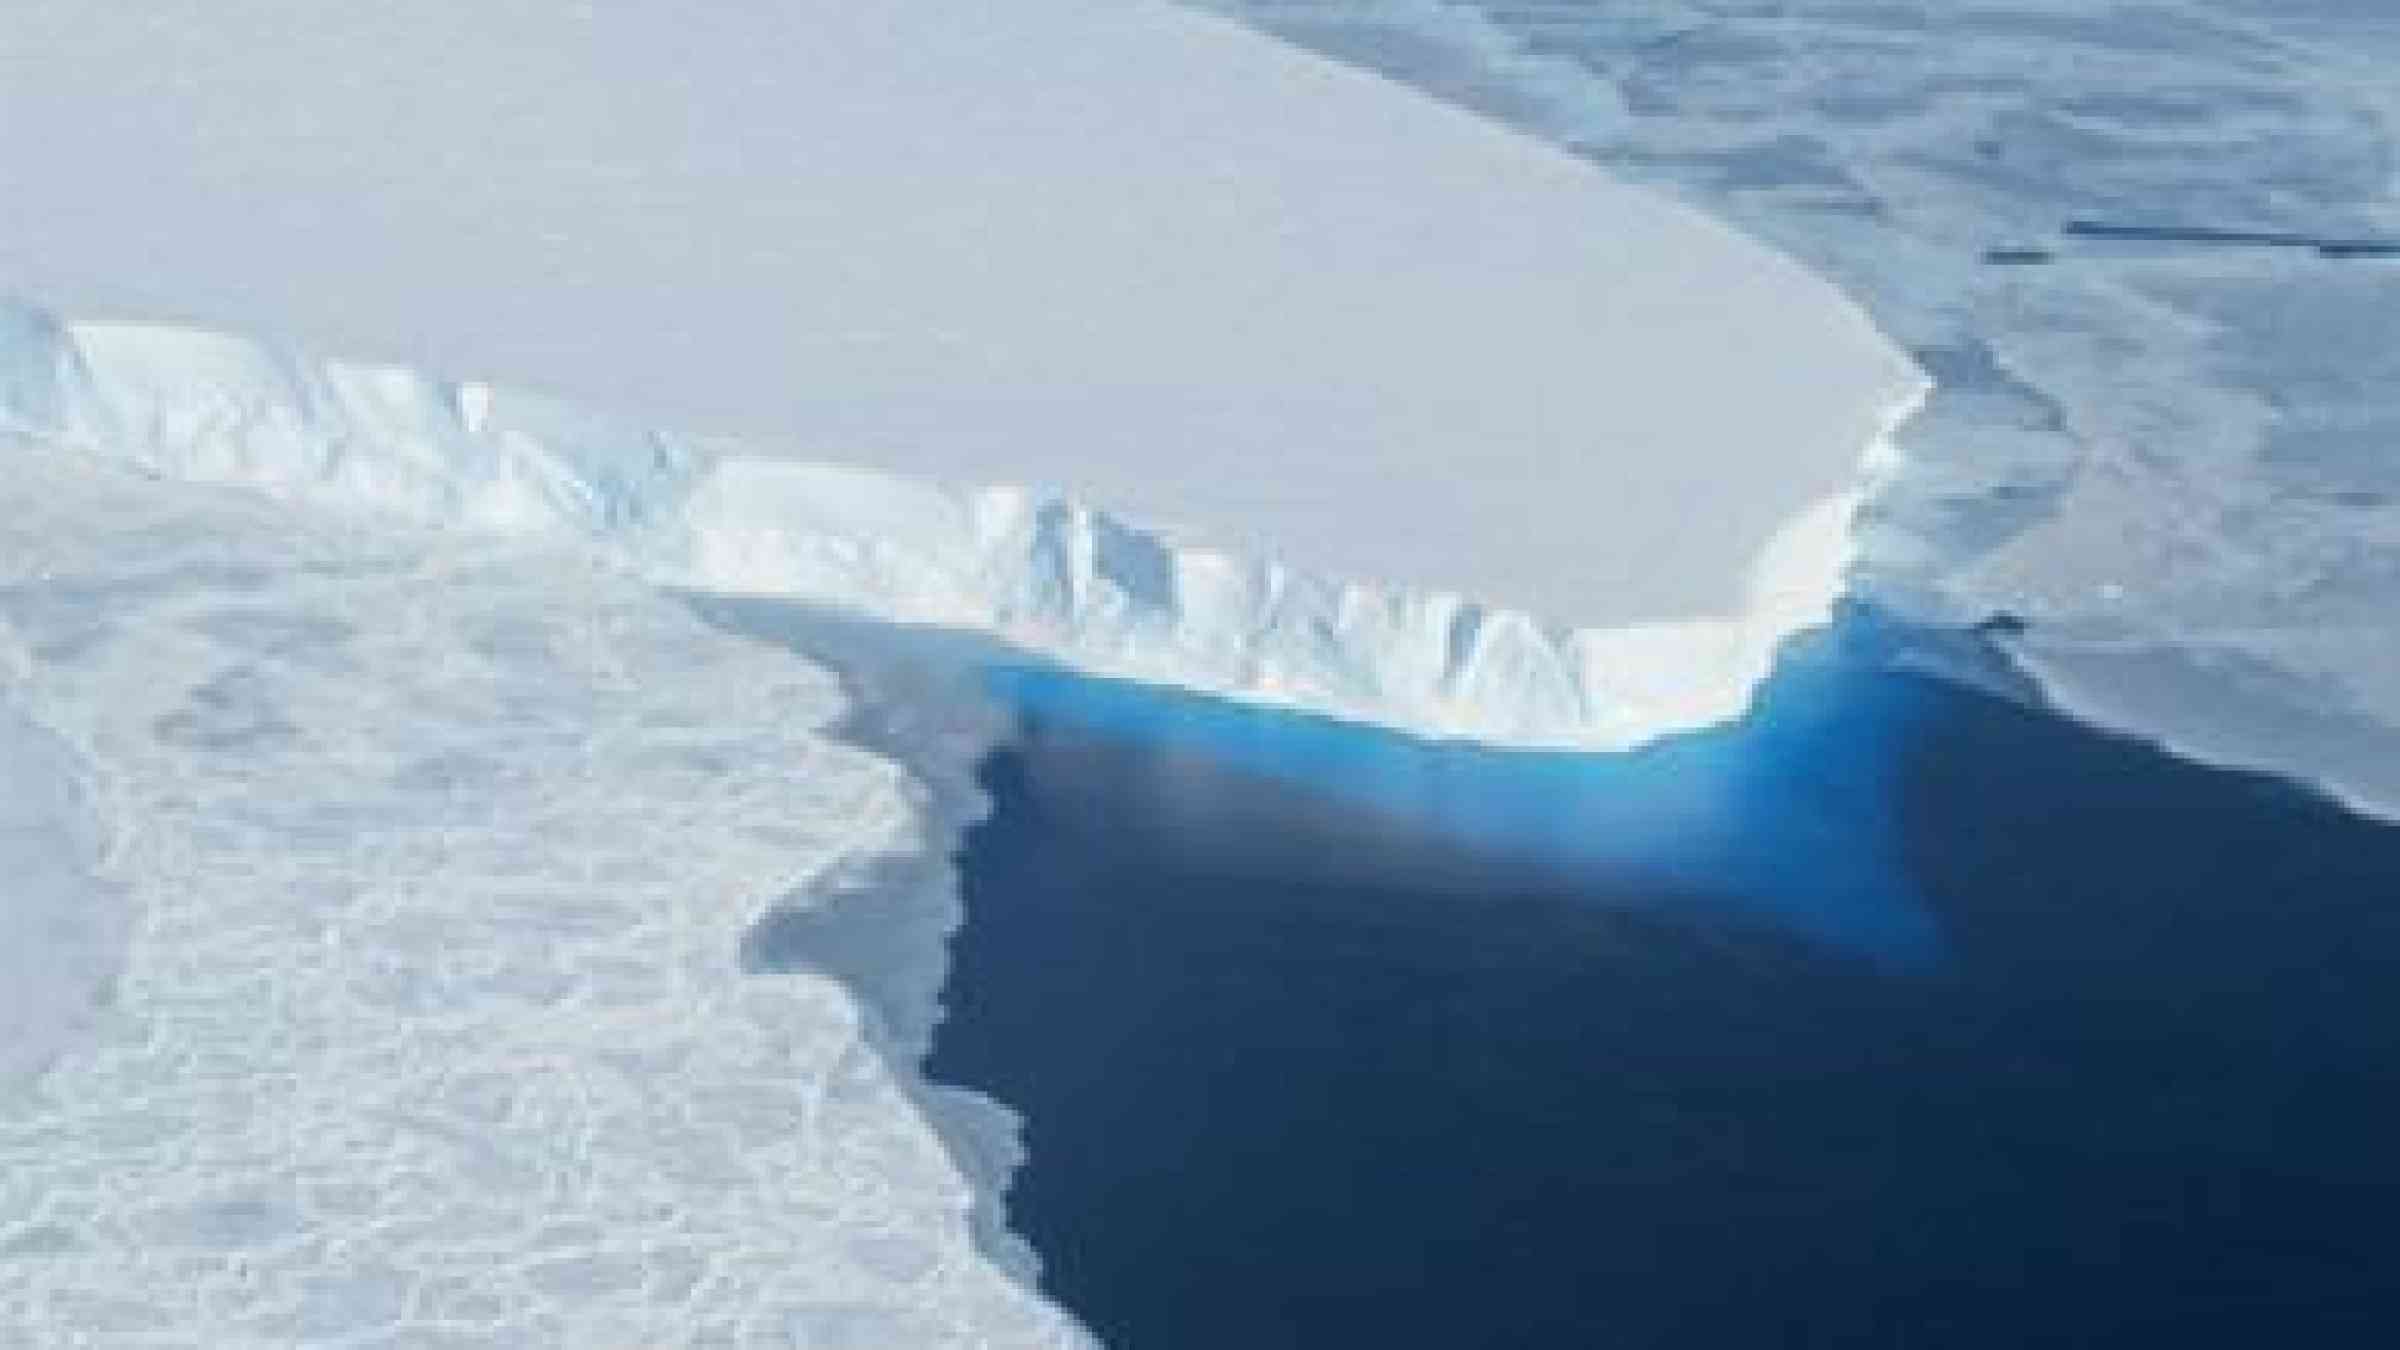 Thwaites Glacier. Image credit: NASA http://www.nasa.gov/jpl/earth/antarctica-telecon20140512/#.U3M7eihLo2M